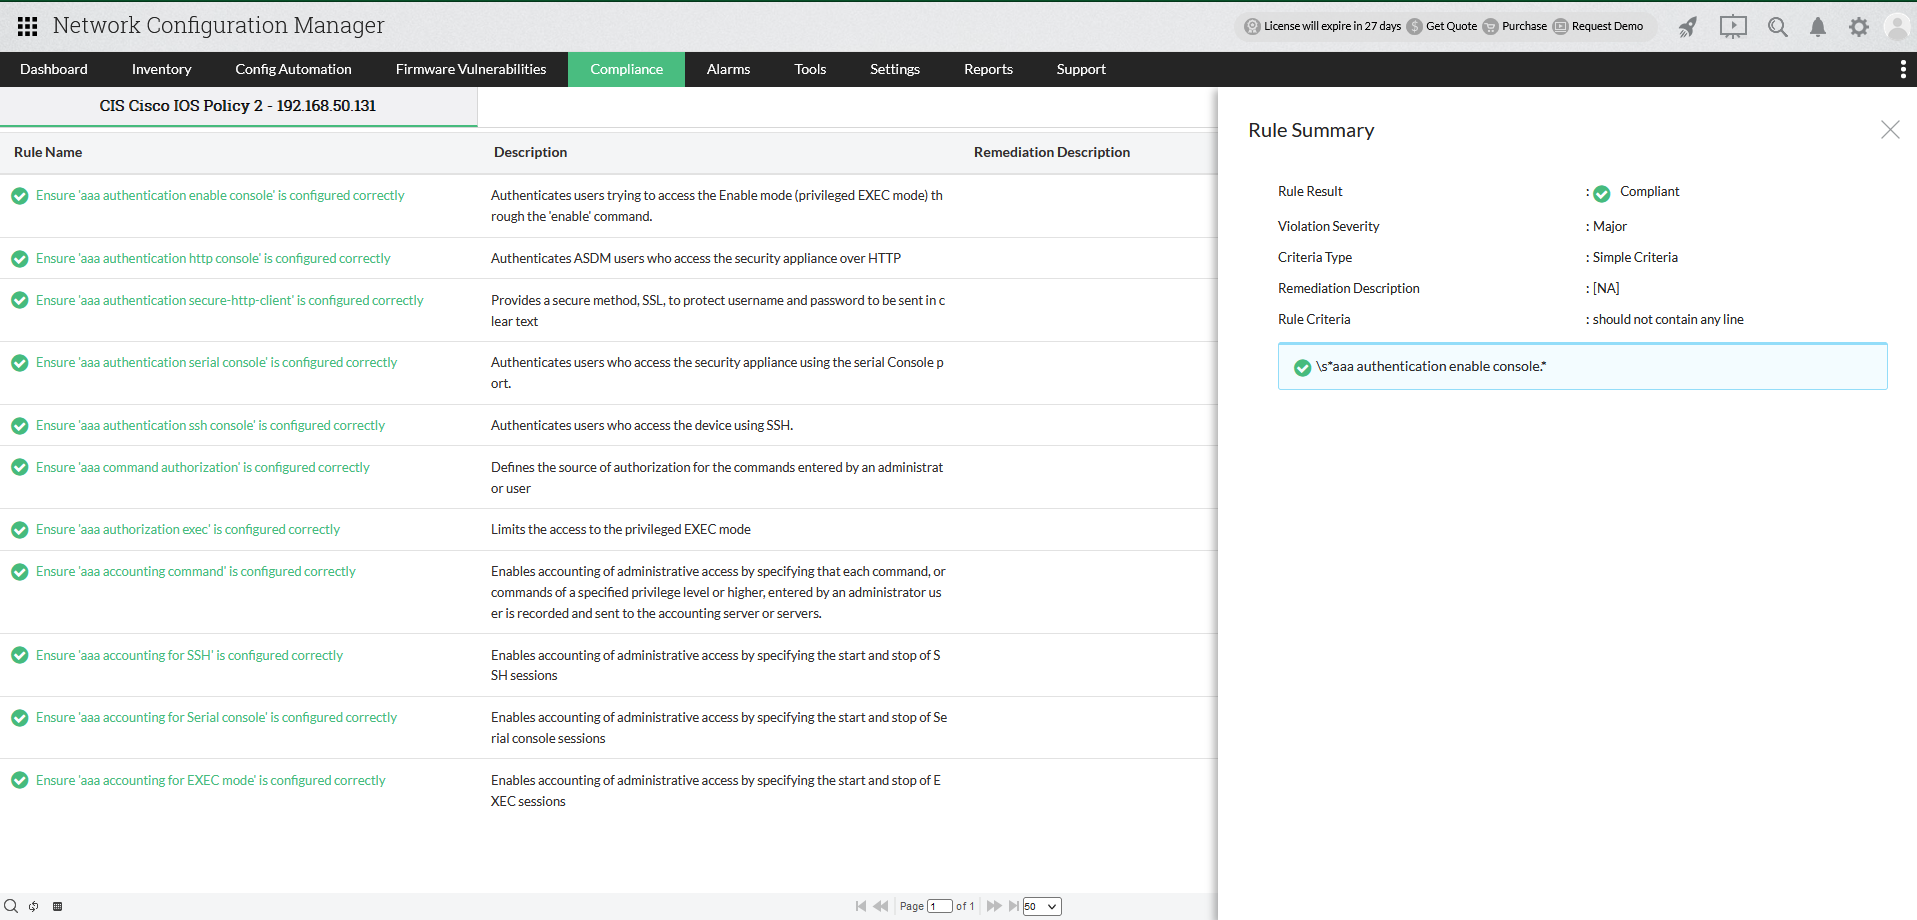 Dashboard de informes de cumplimiento en Network Configuration Manager